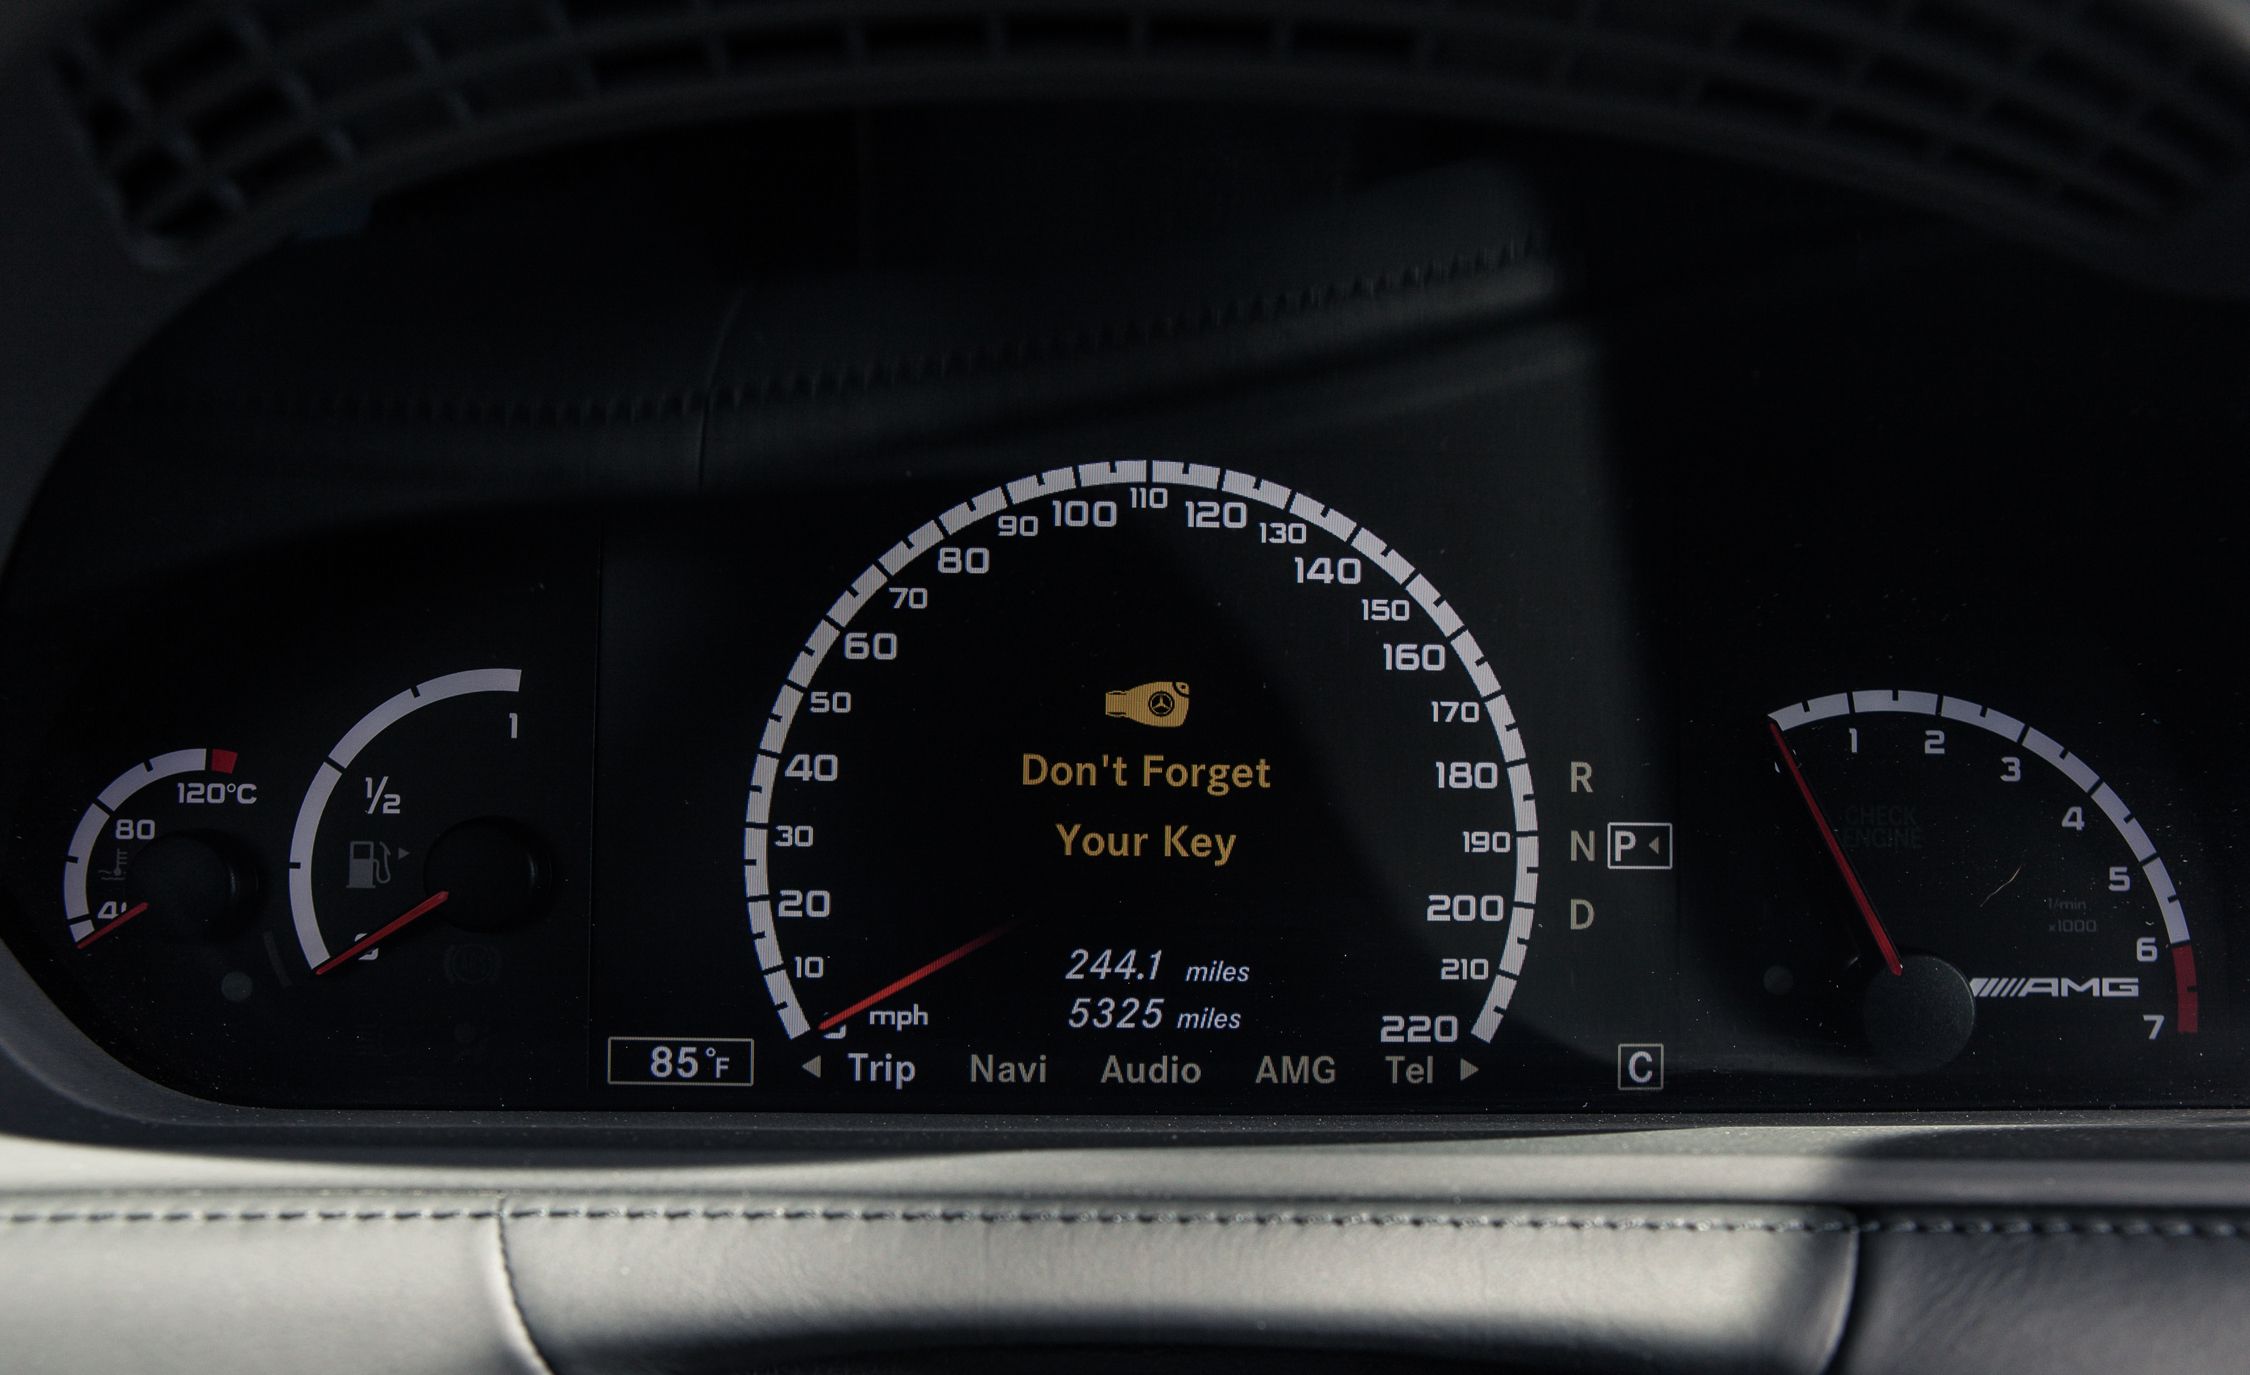 2013 Mercedes Benz CL65 AMG Interior View Speedometer Instrument Cluster (View 11 of 27)